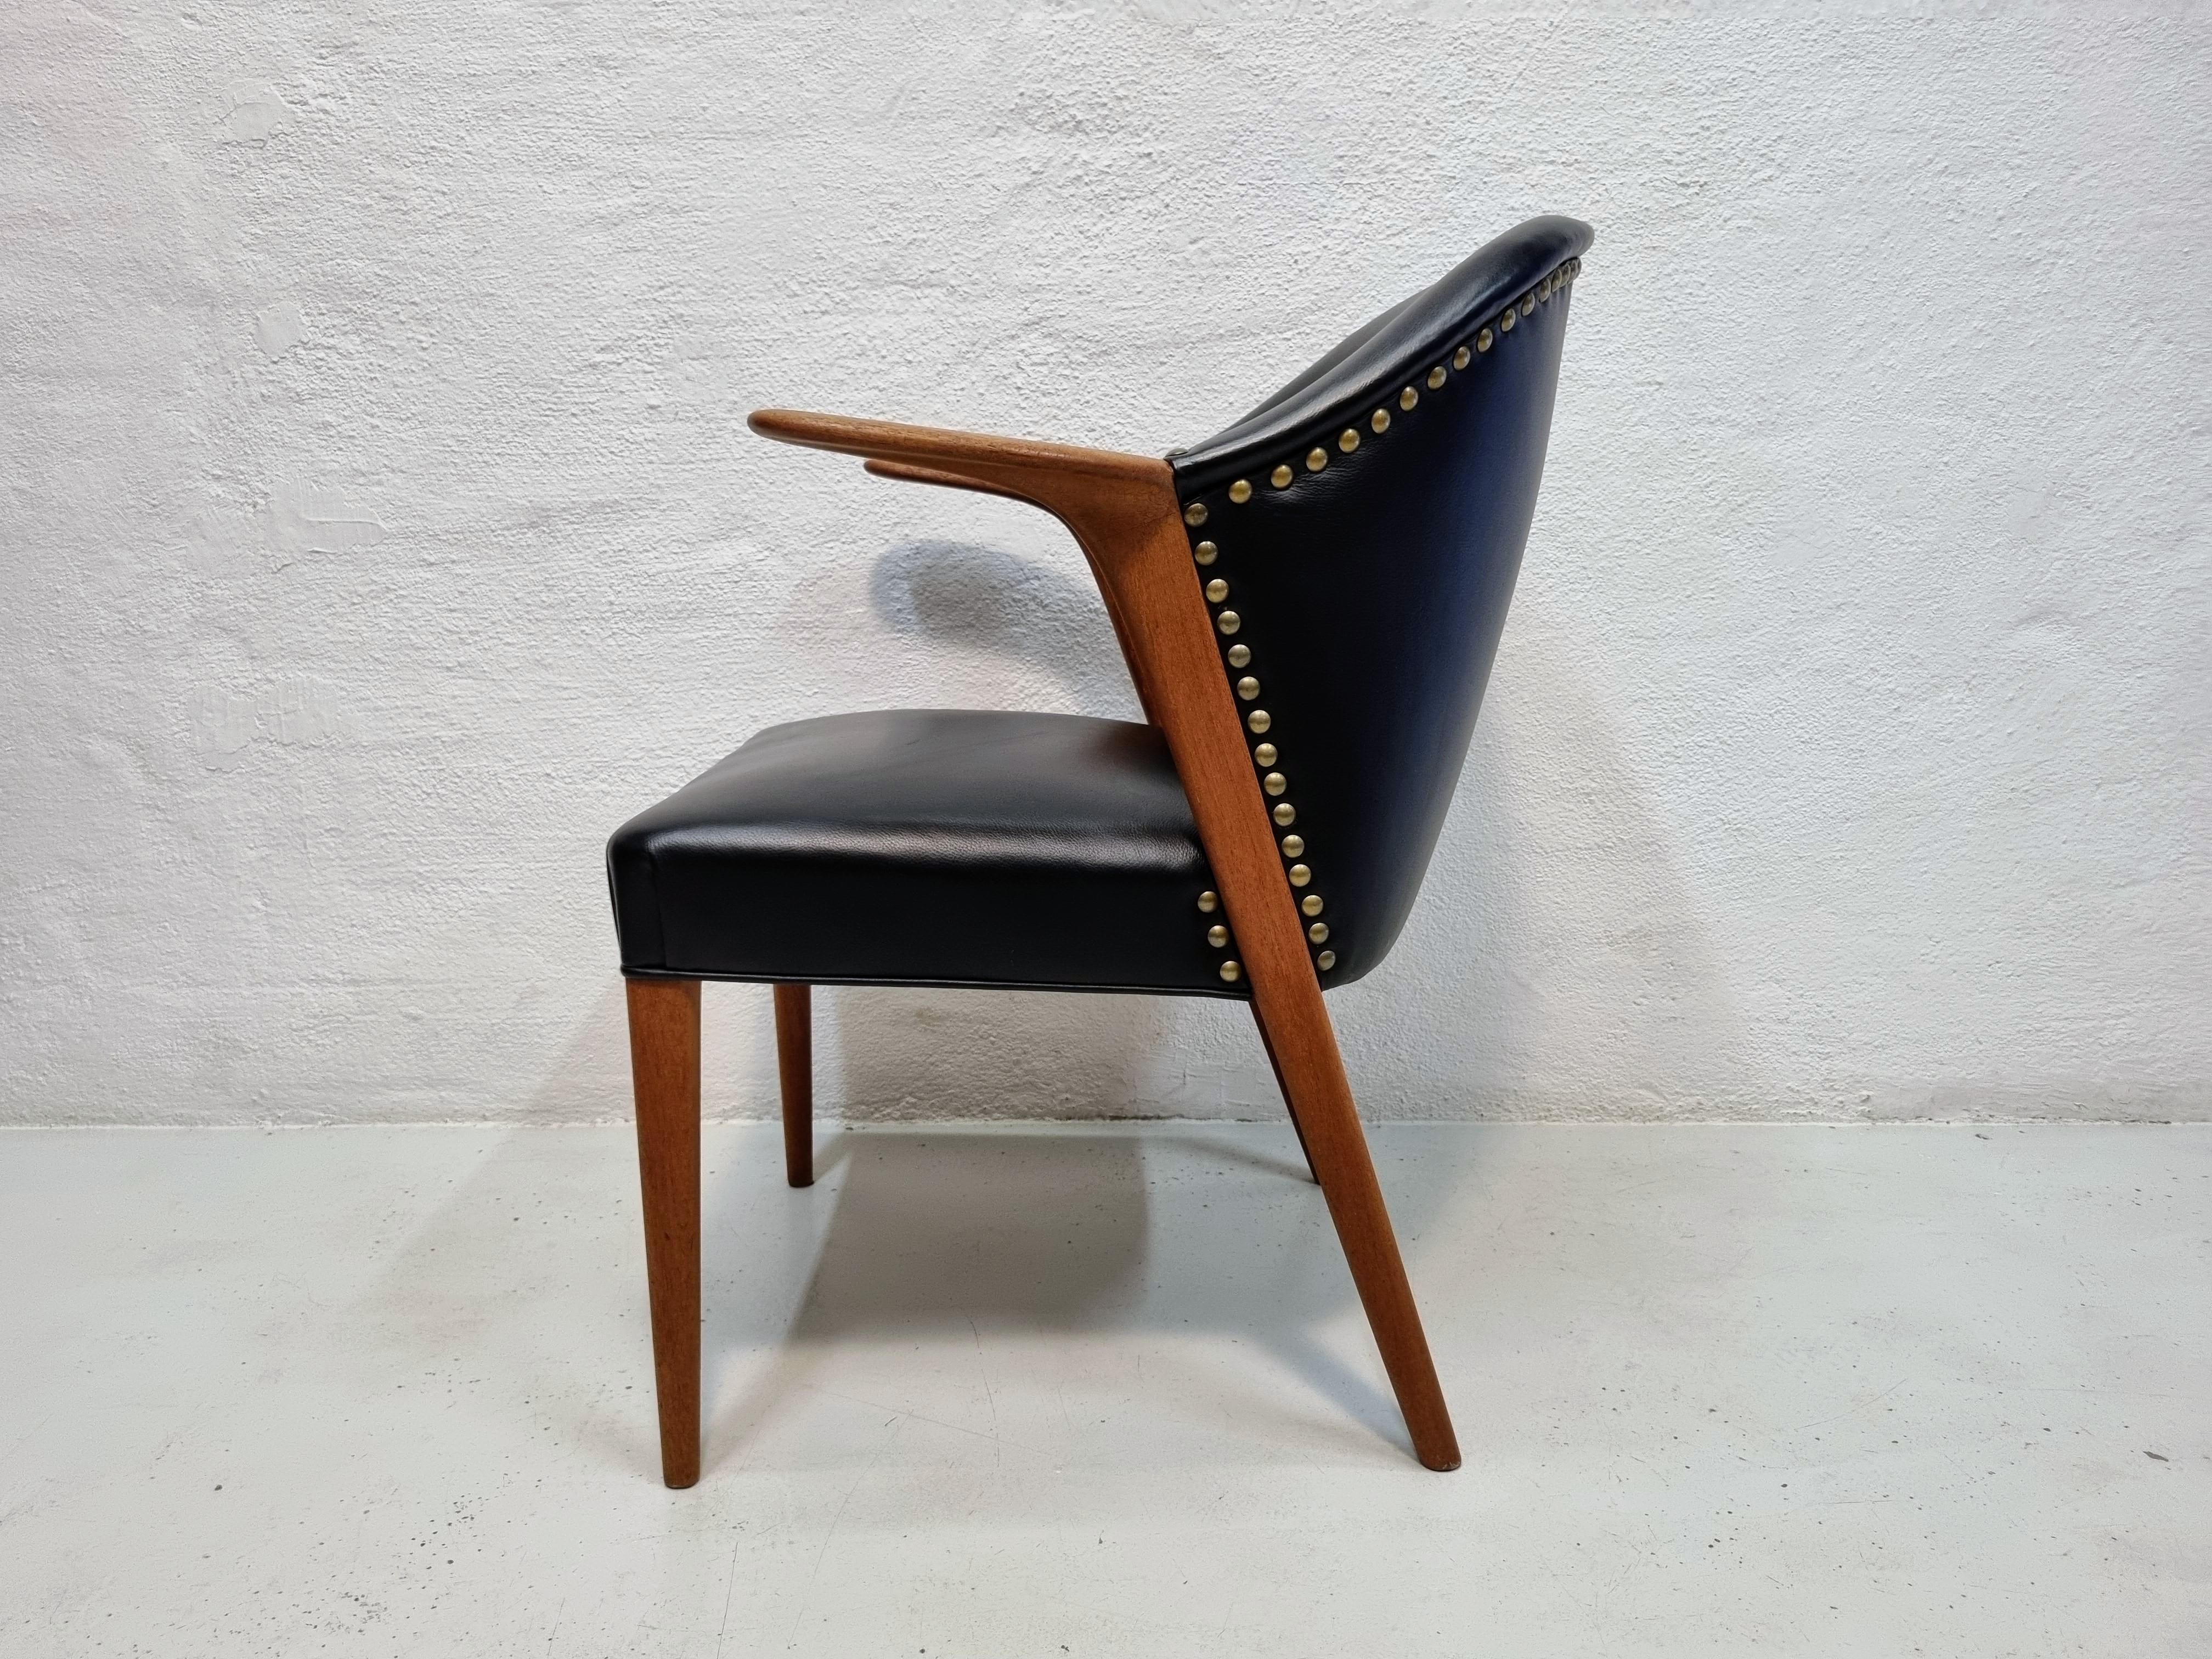 The armchair model 31 is designed by danish designer Kurt Olsen and produced in the 50s by Slagelse møbelværk.
